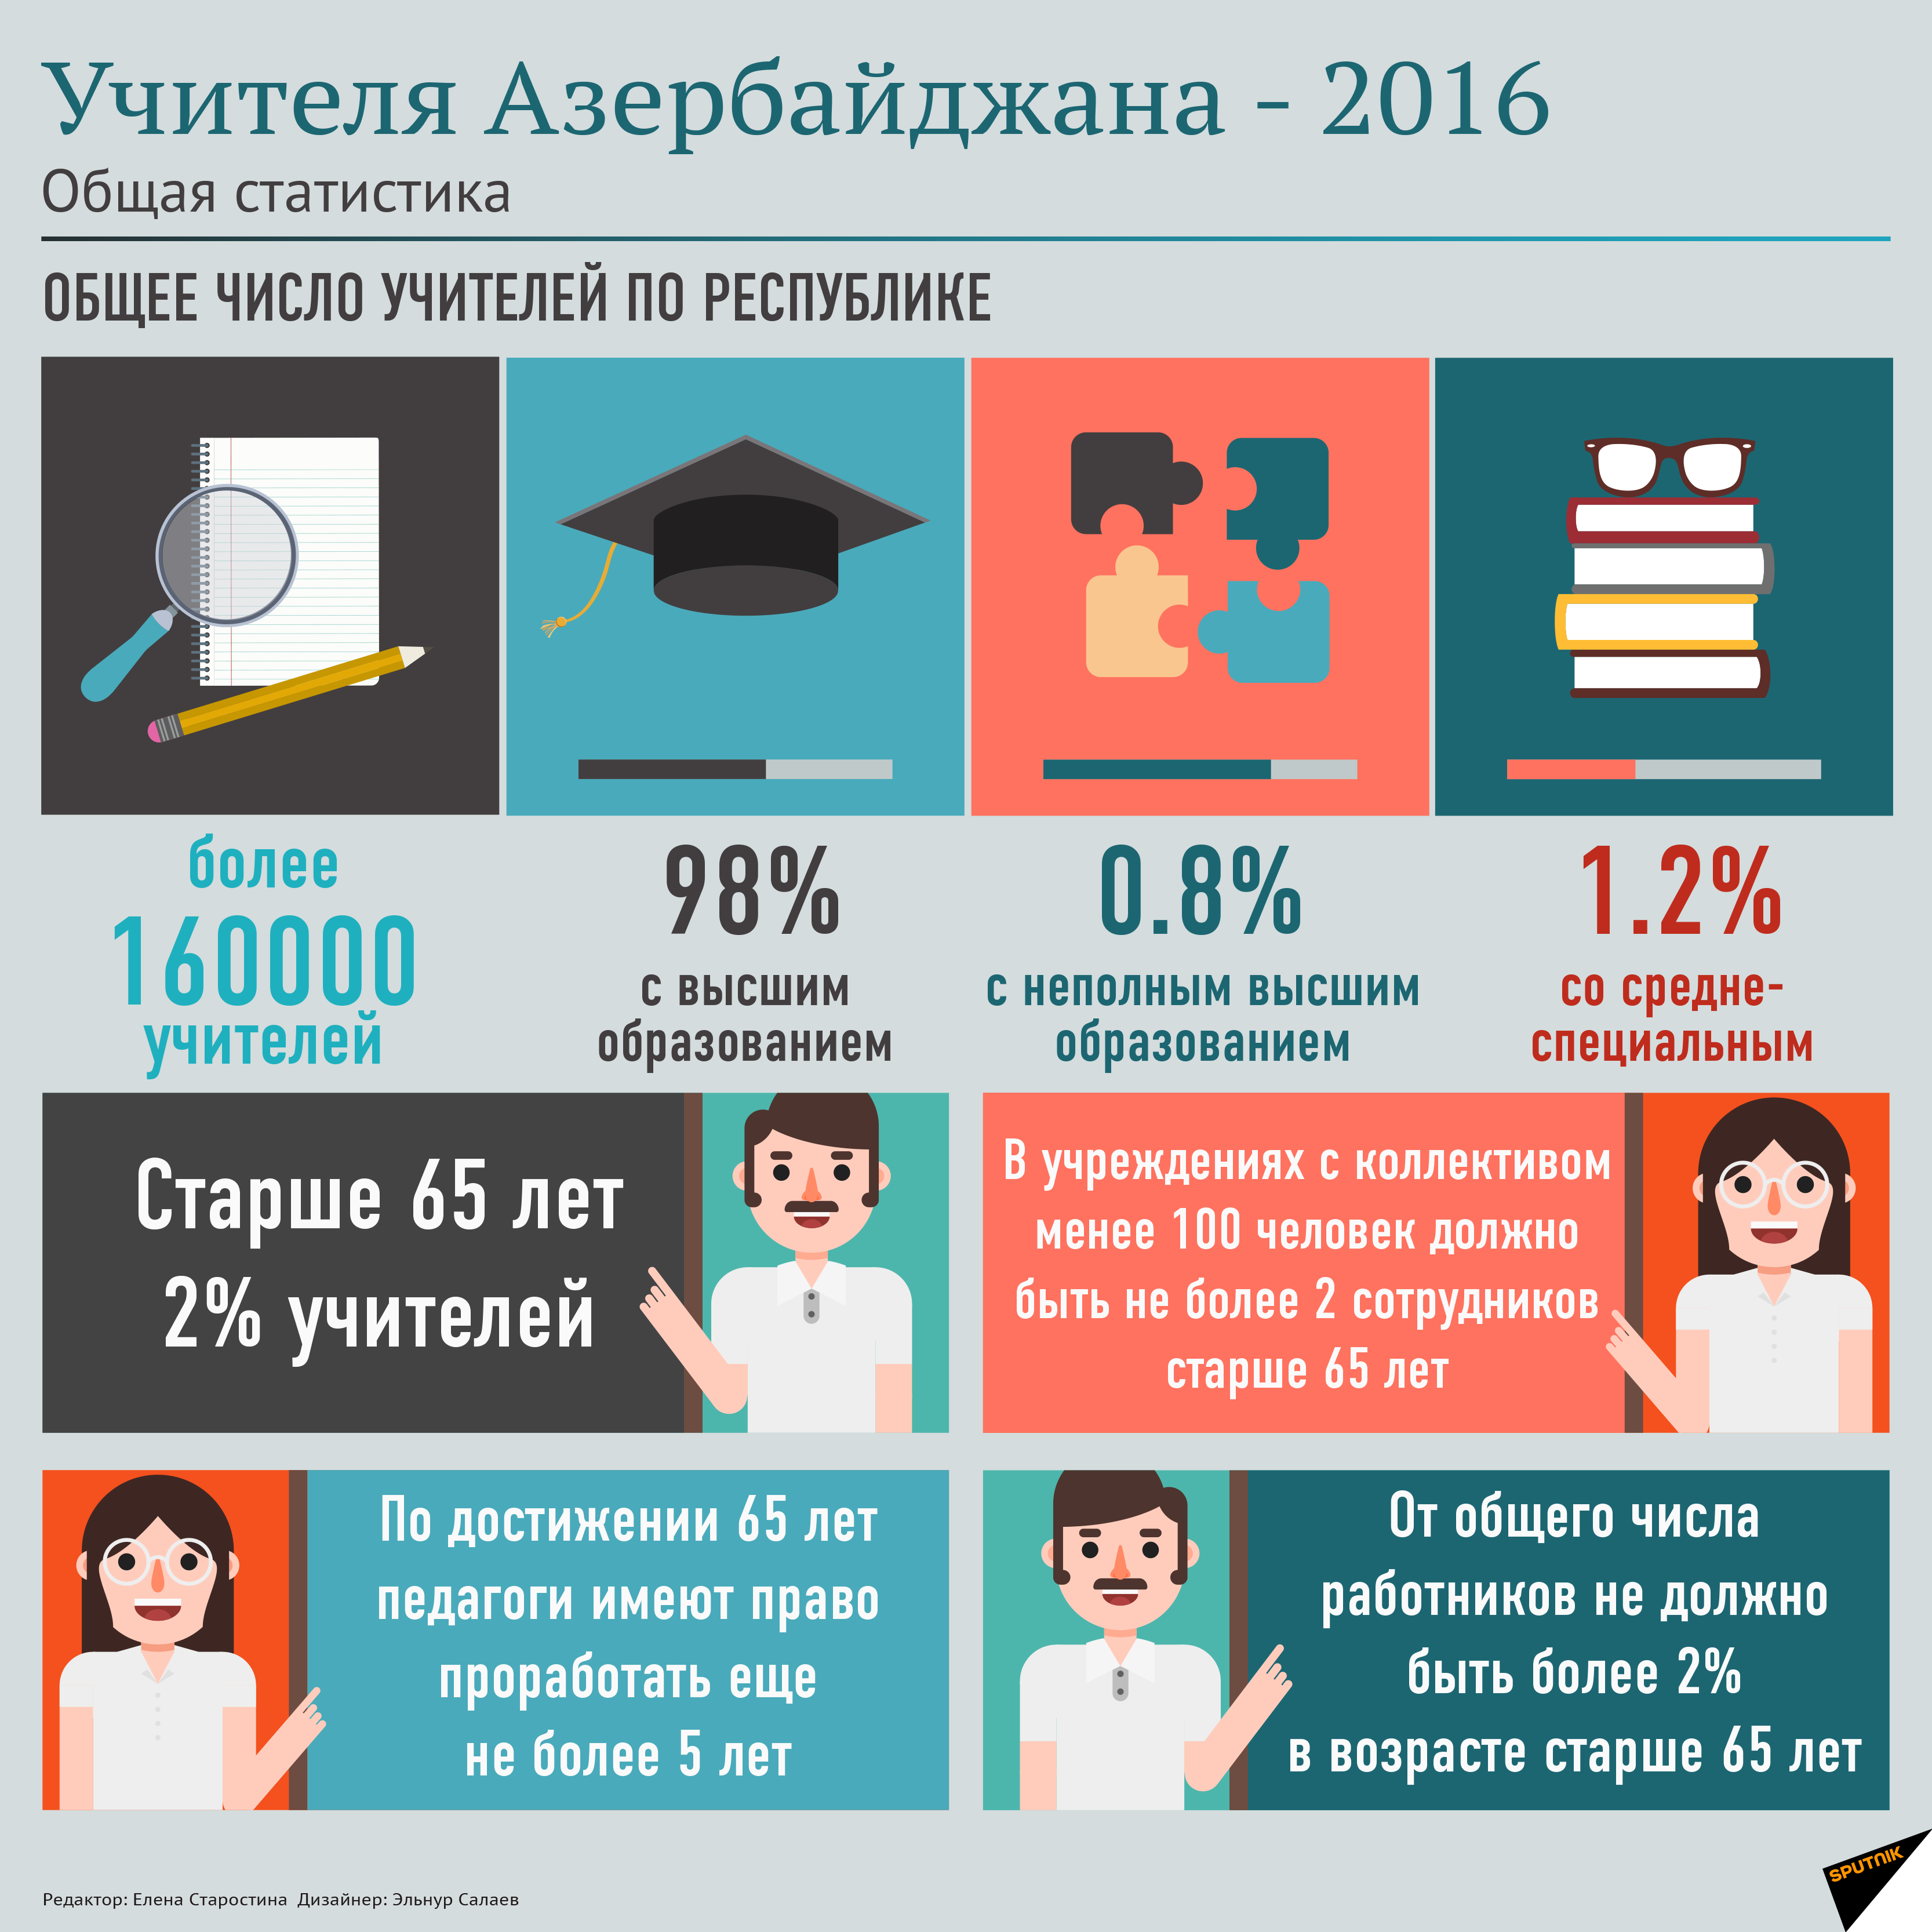 Учителя Азербайджана - 2016 - Sputnik Азербайджан